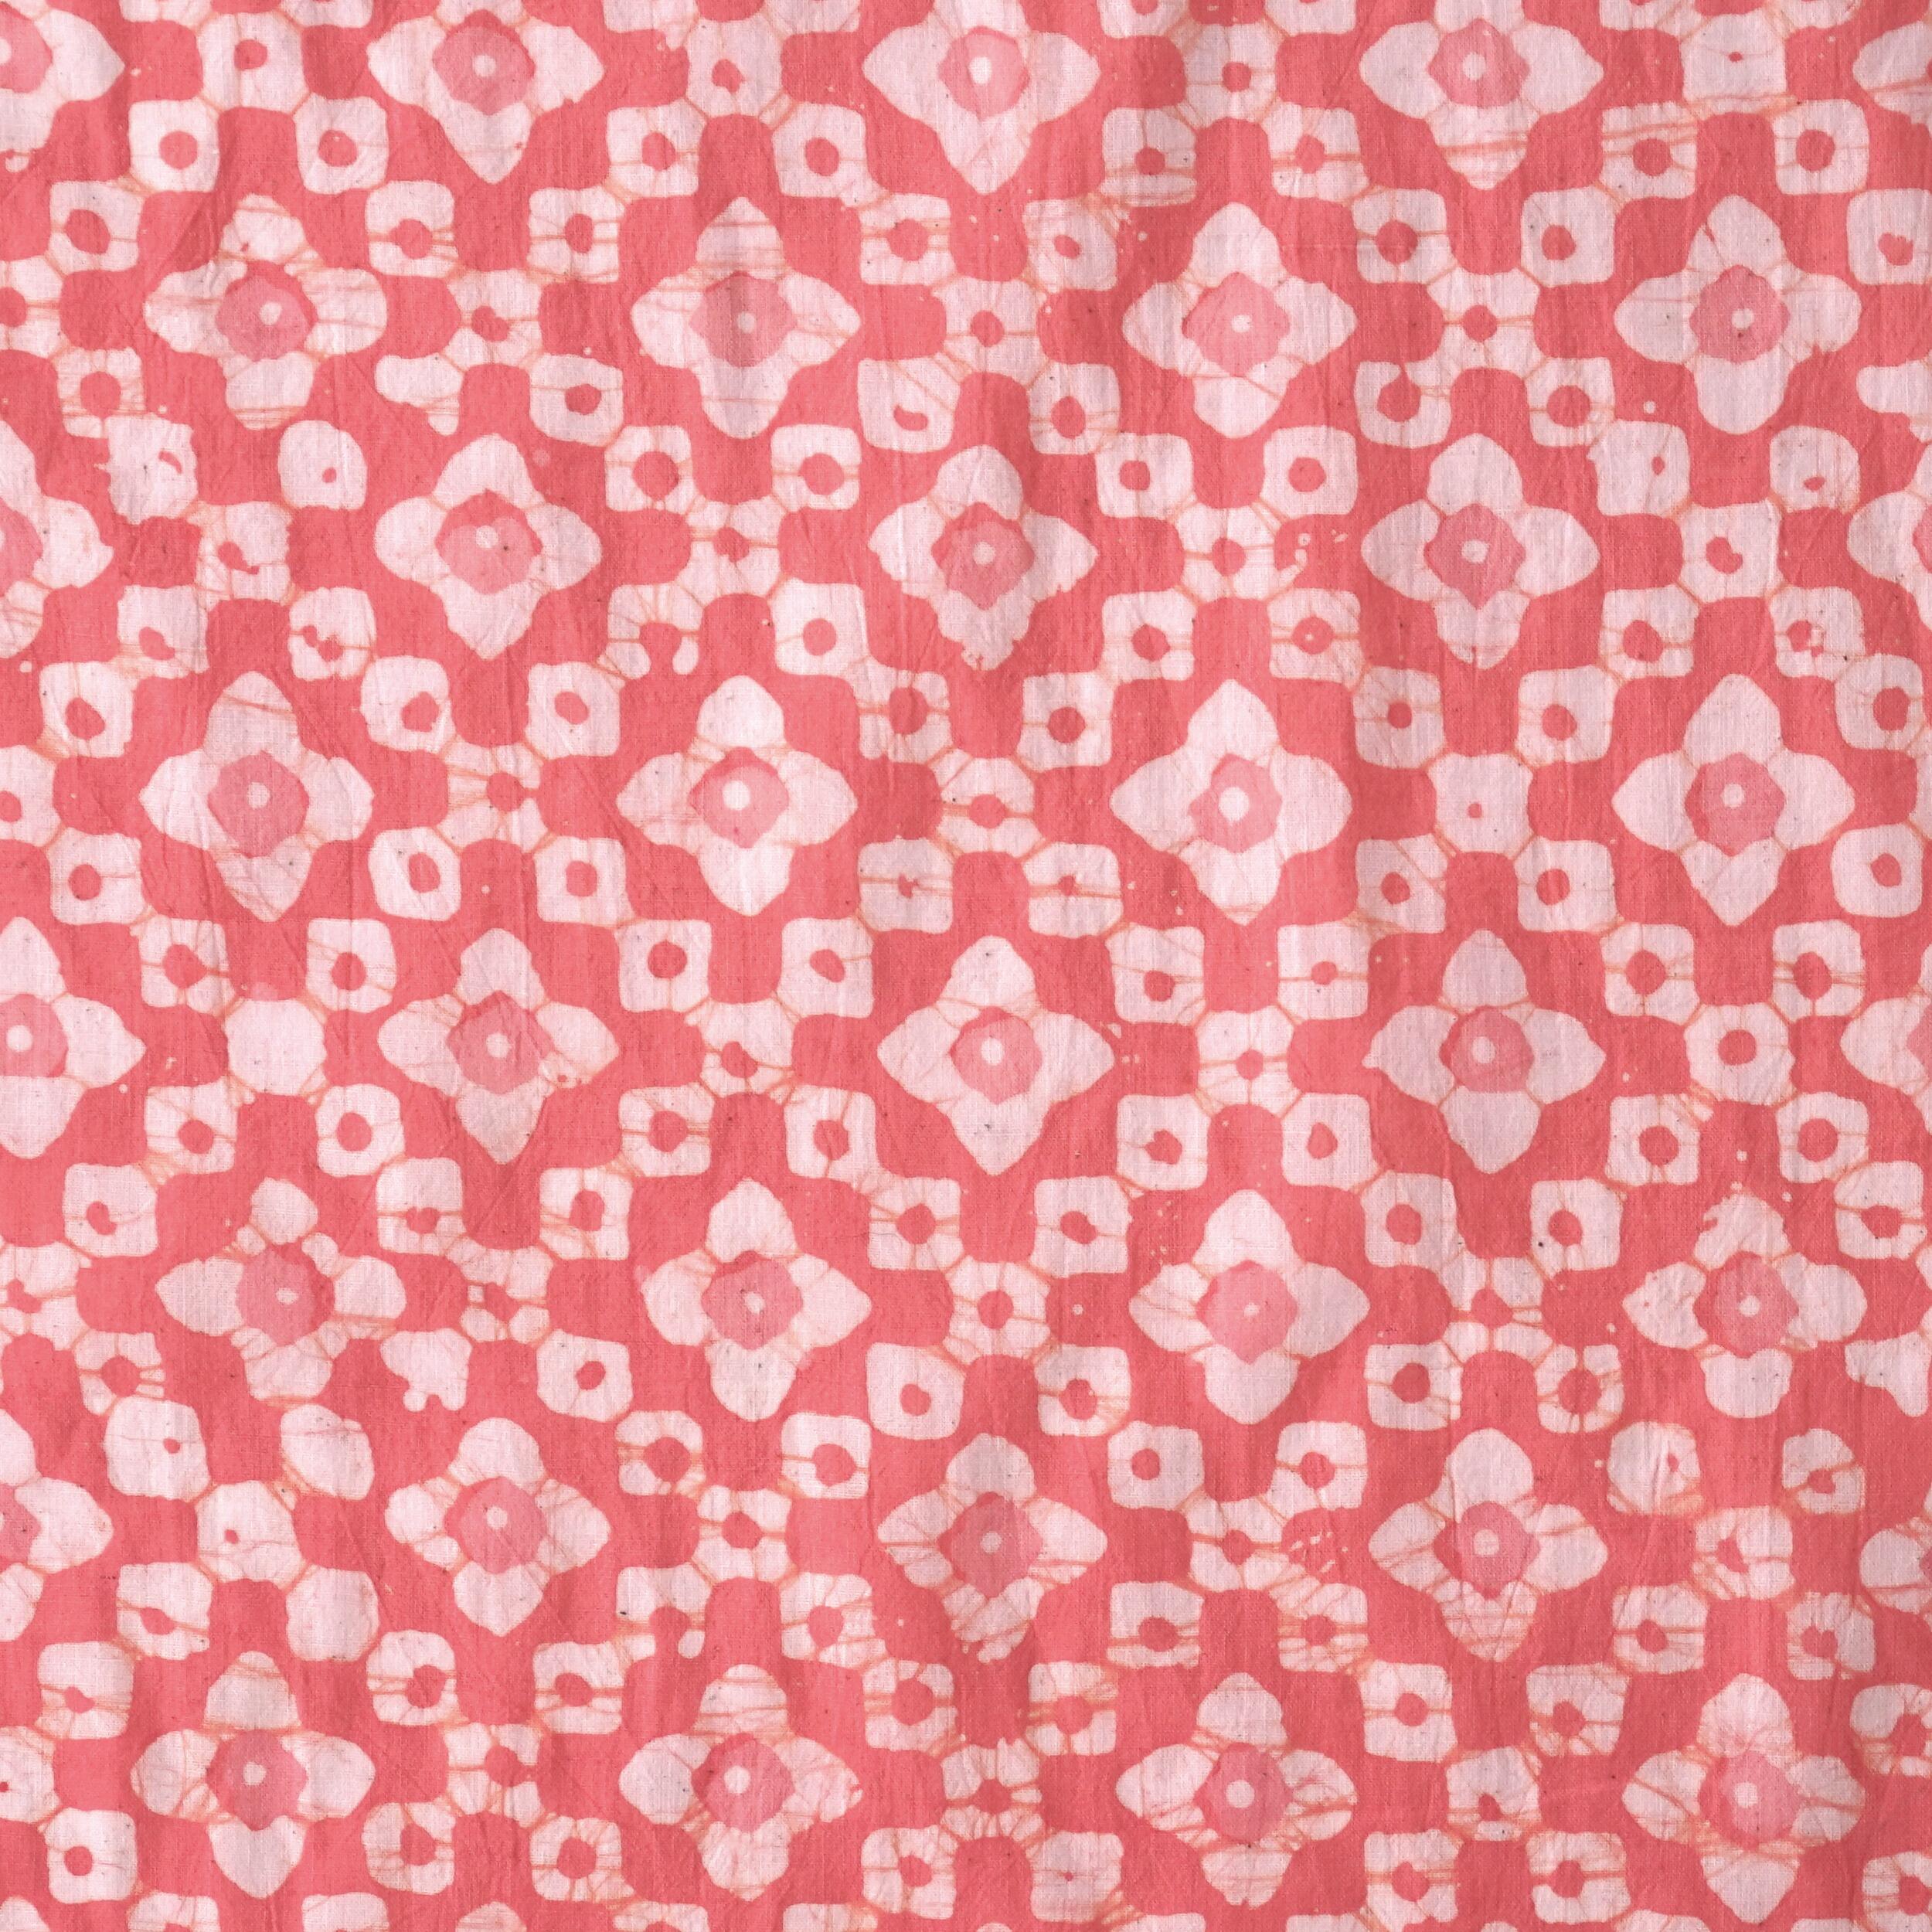 100% Block-Printed Batik Cotton Fabric From India - Alhambra Tiles Motif - Salmon Dye - Flat